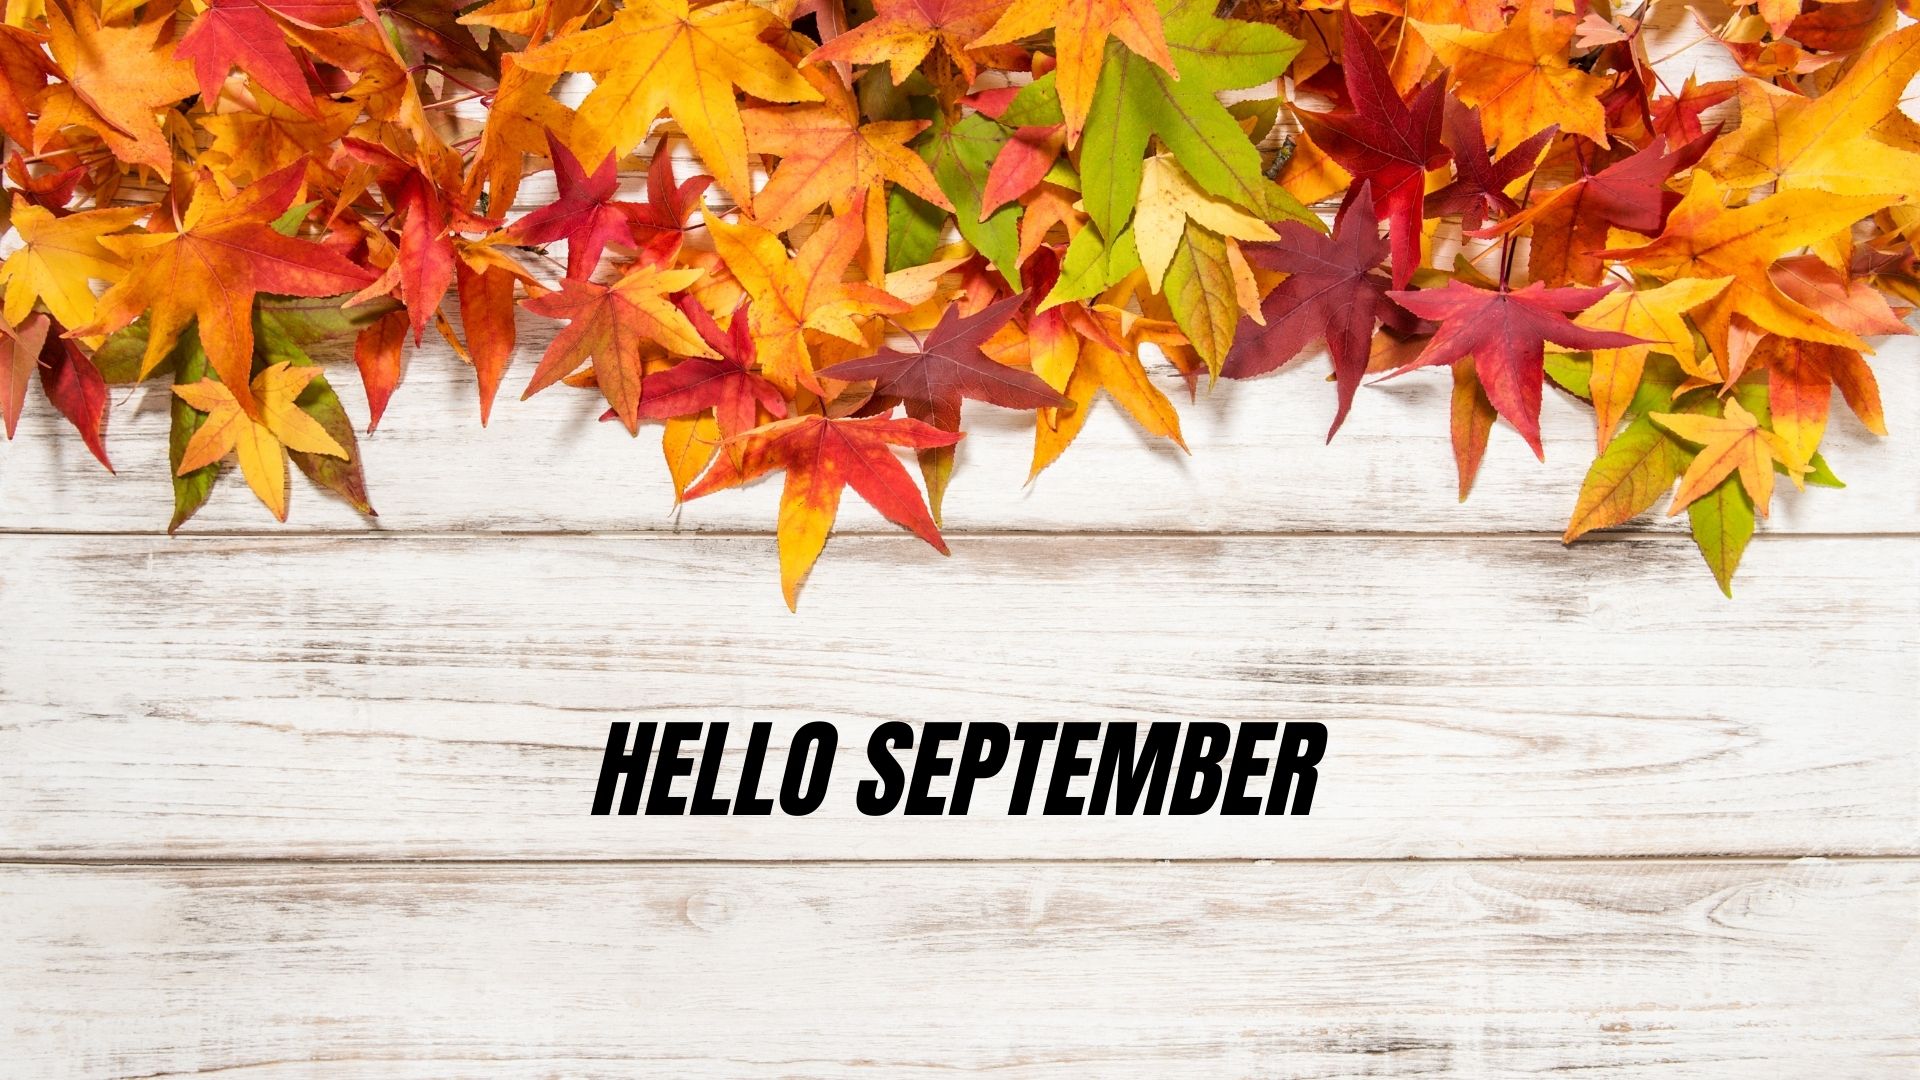 Hello September desktop wallpaper
